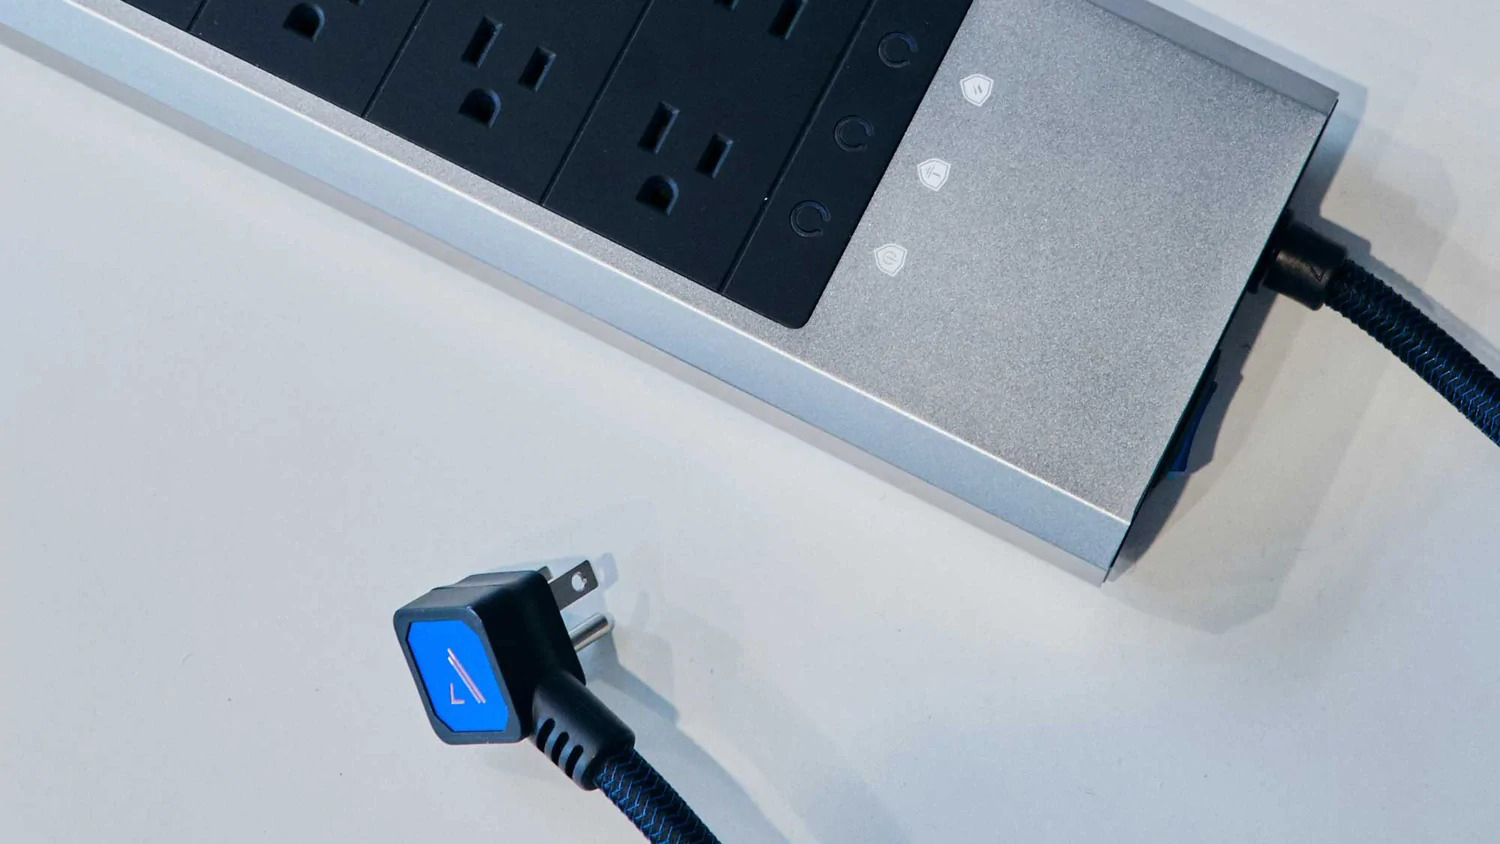 LINGANZH Smart Plug Wi-Fi Smart Socket Compatible with Alexa